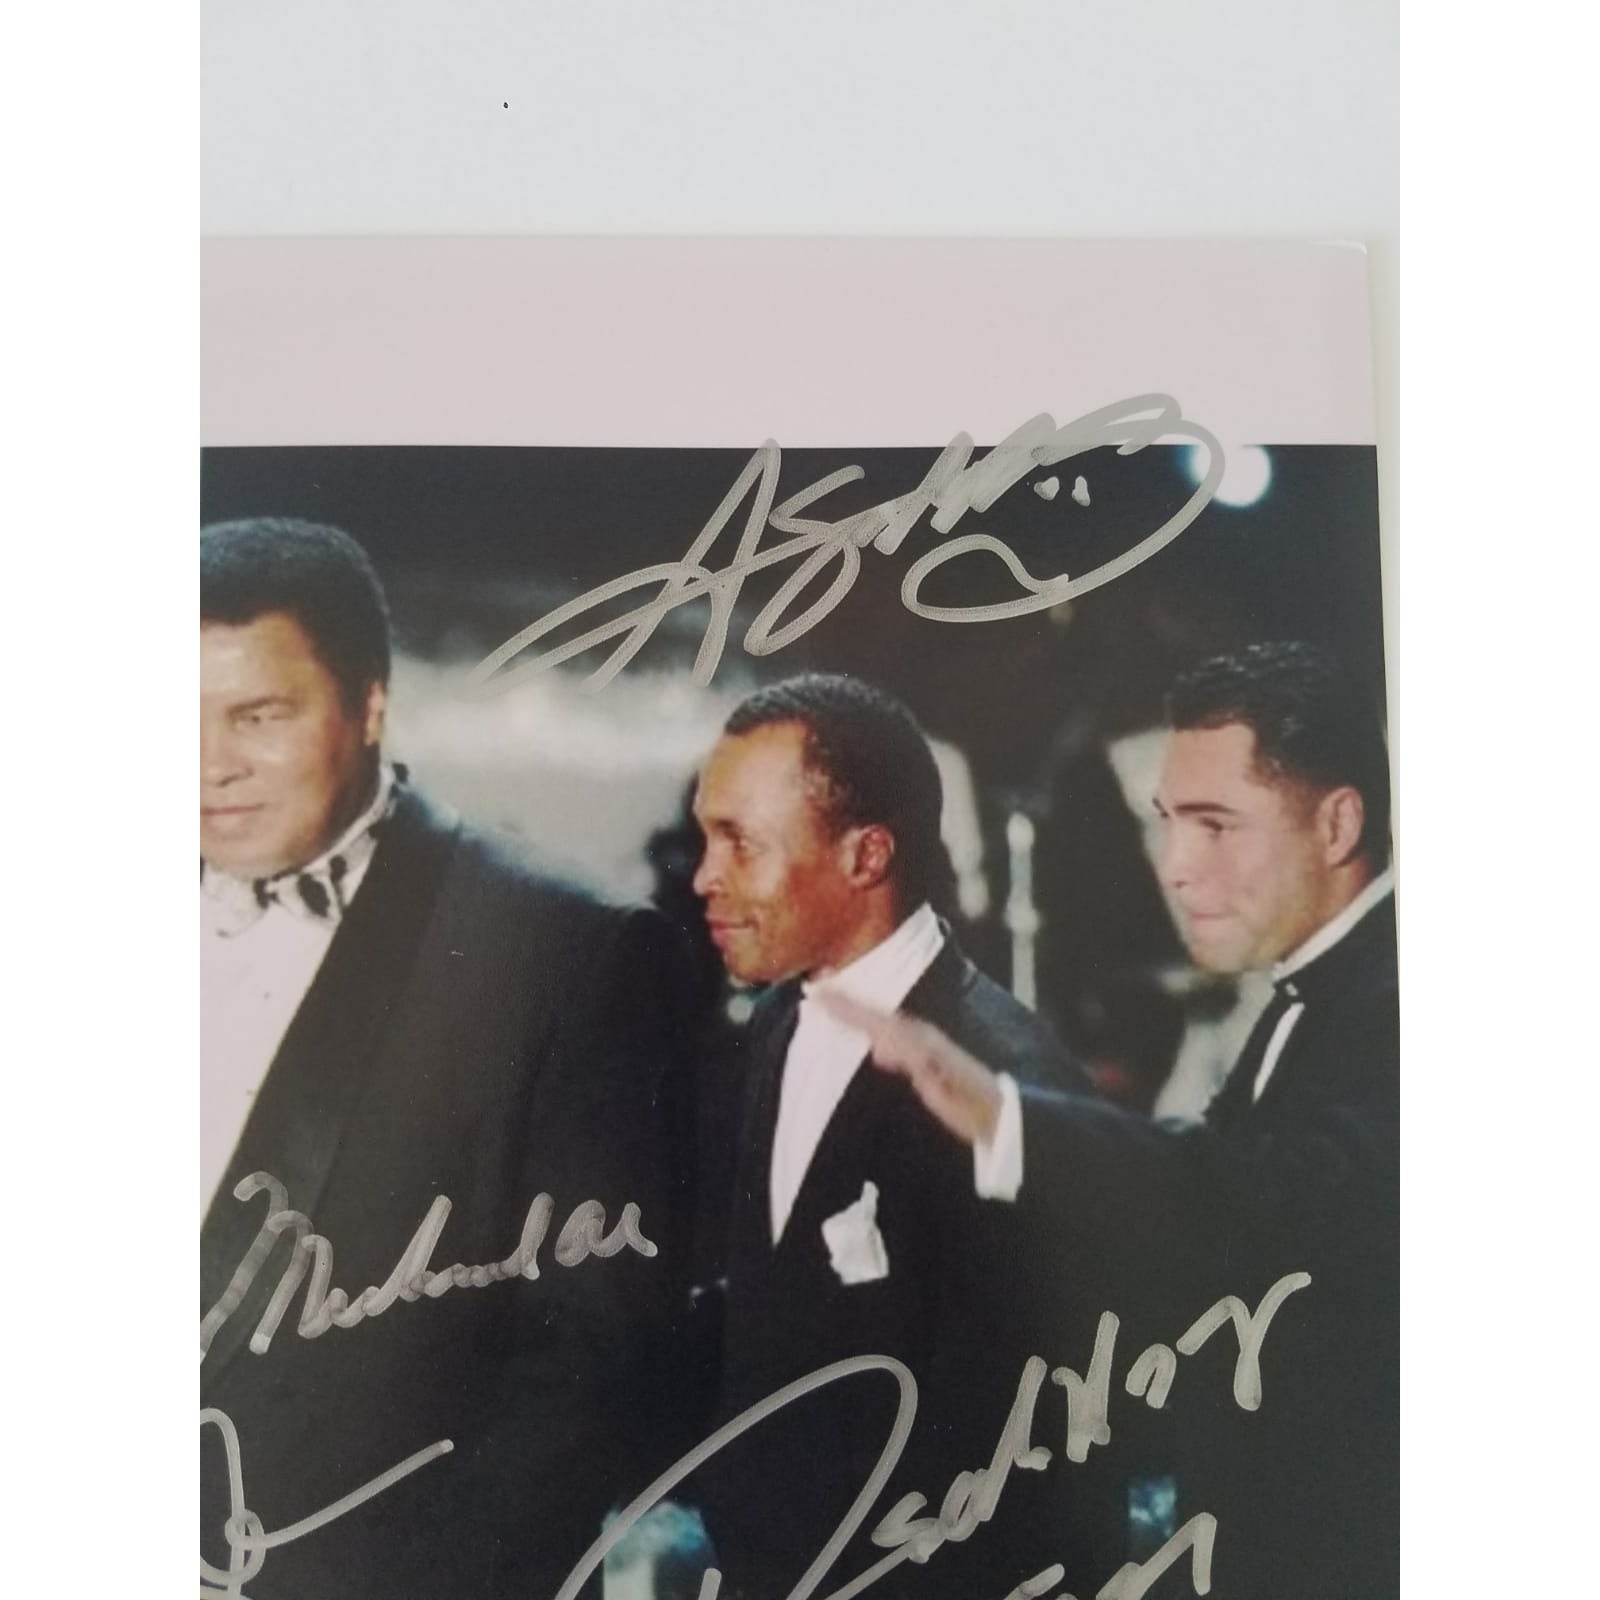 Marvin Hagler Muhammad Ali Oscar De La Hoya Sugar Ray Leonard Thomas Hearns 8x10 photo signed